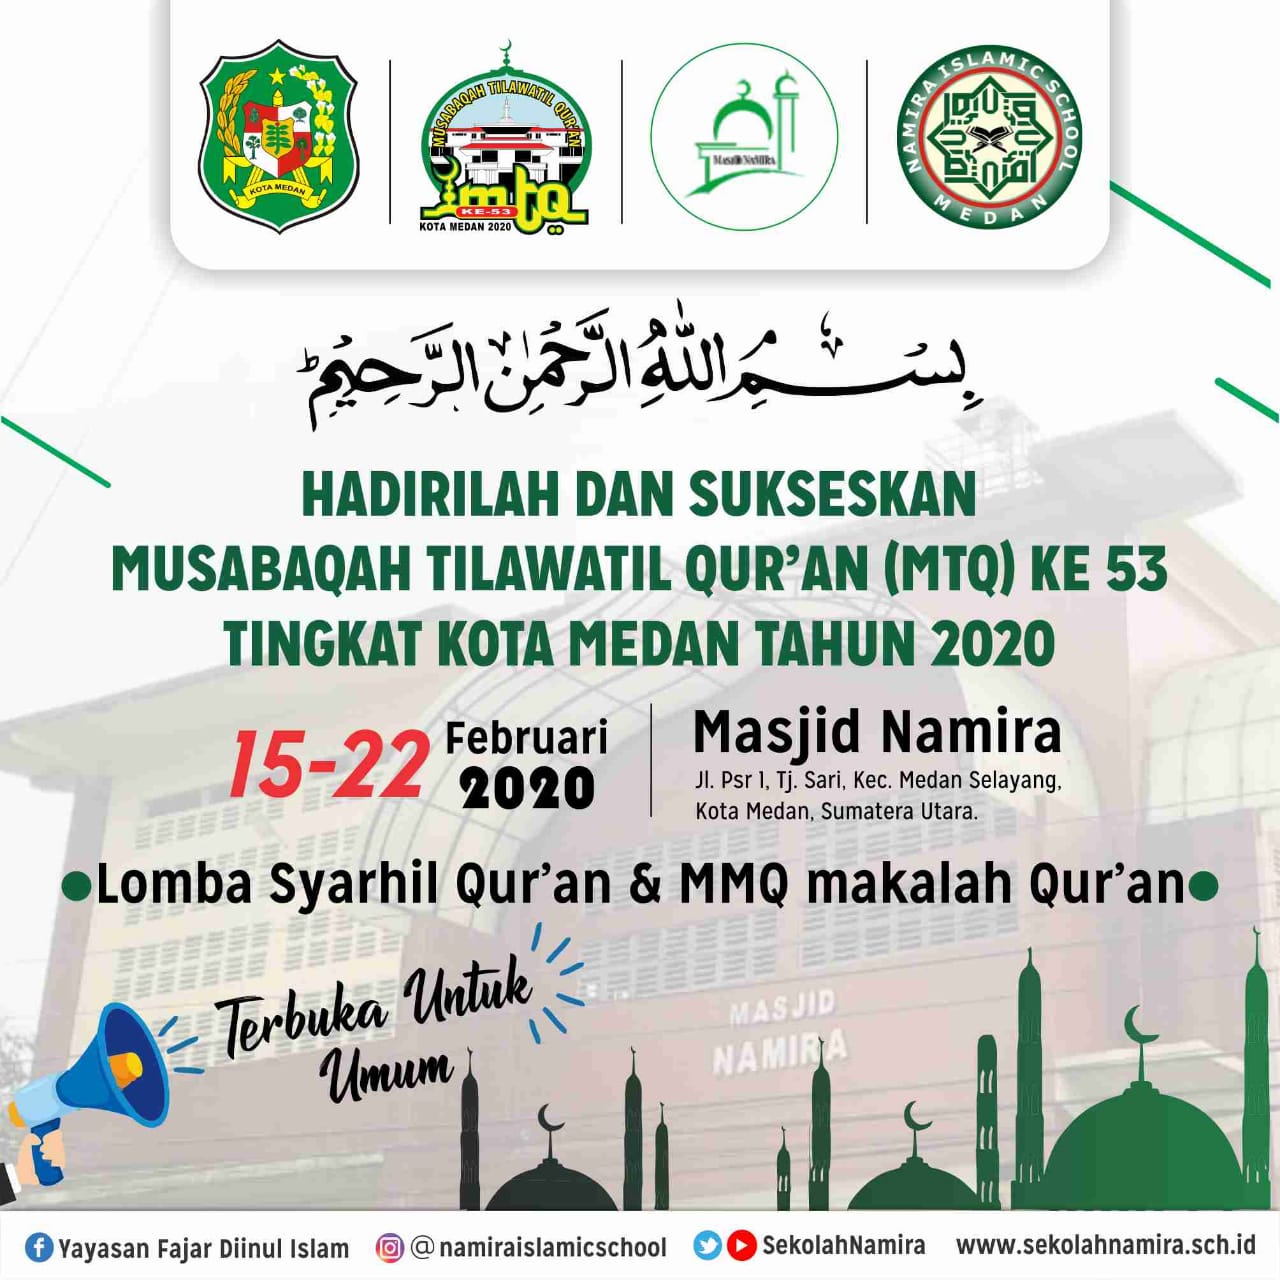 Alhamdulillah Sekolah Namira Menjadi Tempat Pelaksanaan Perlombaan Syarhil Quran dan MMQ pada MTQ Ke 53 Kota Medan